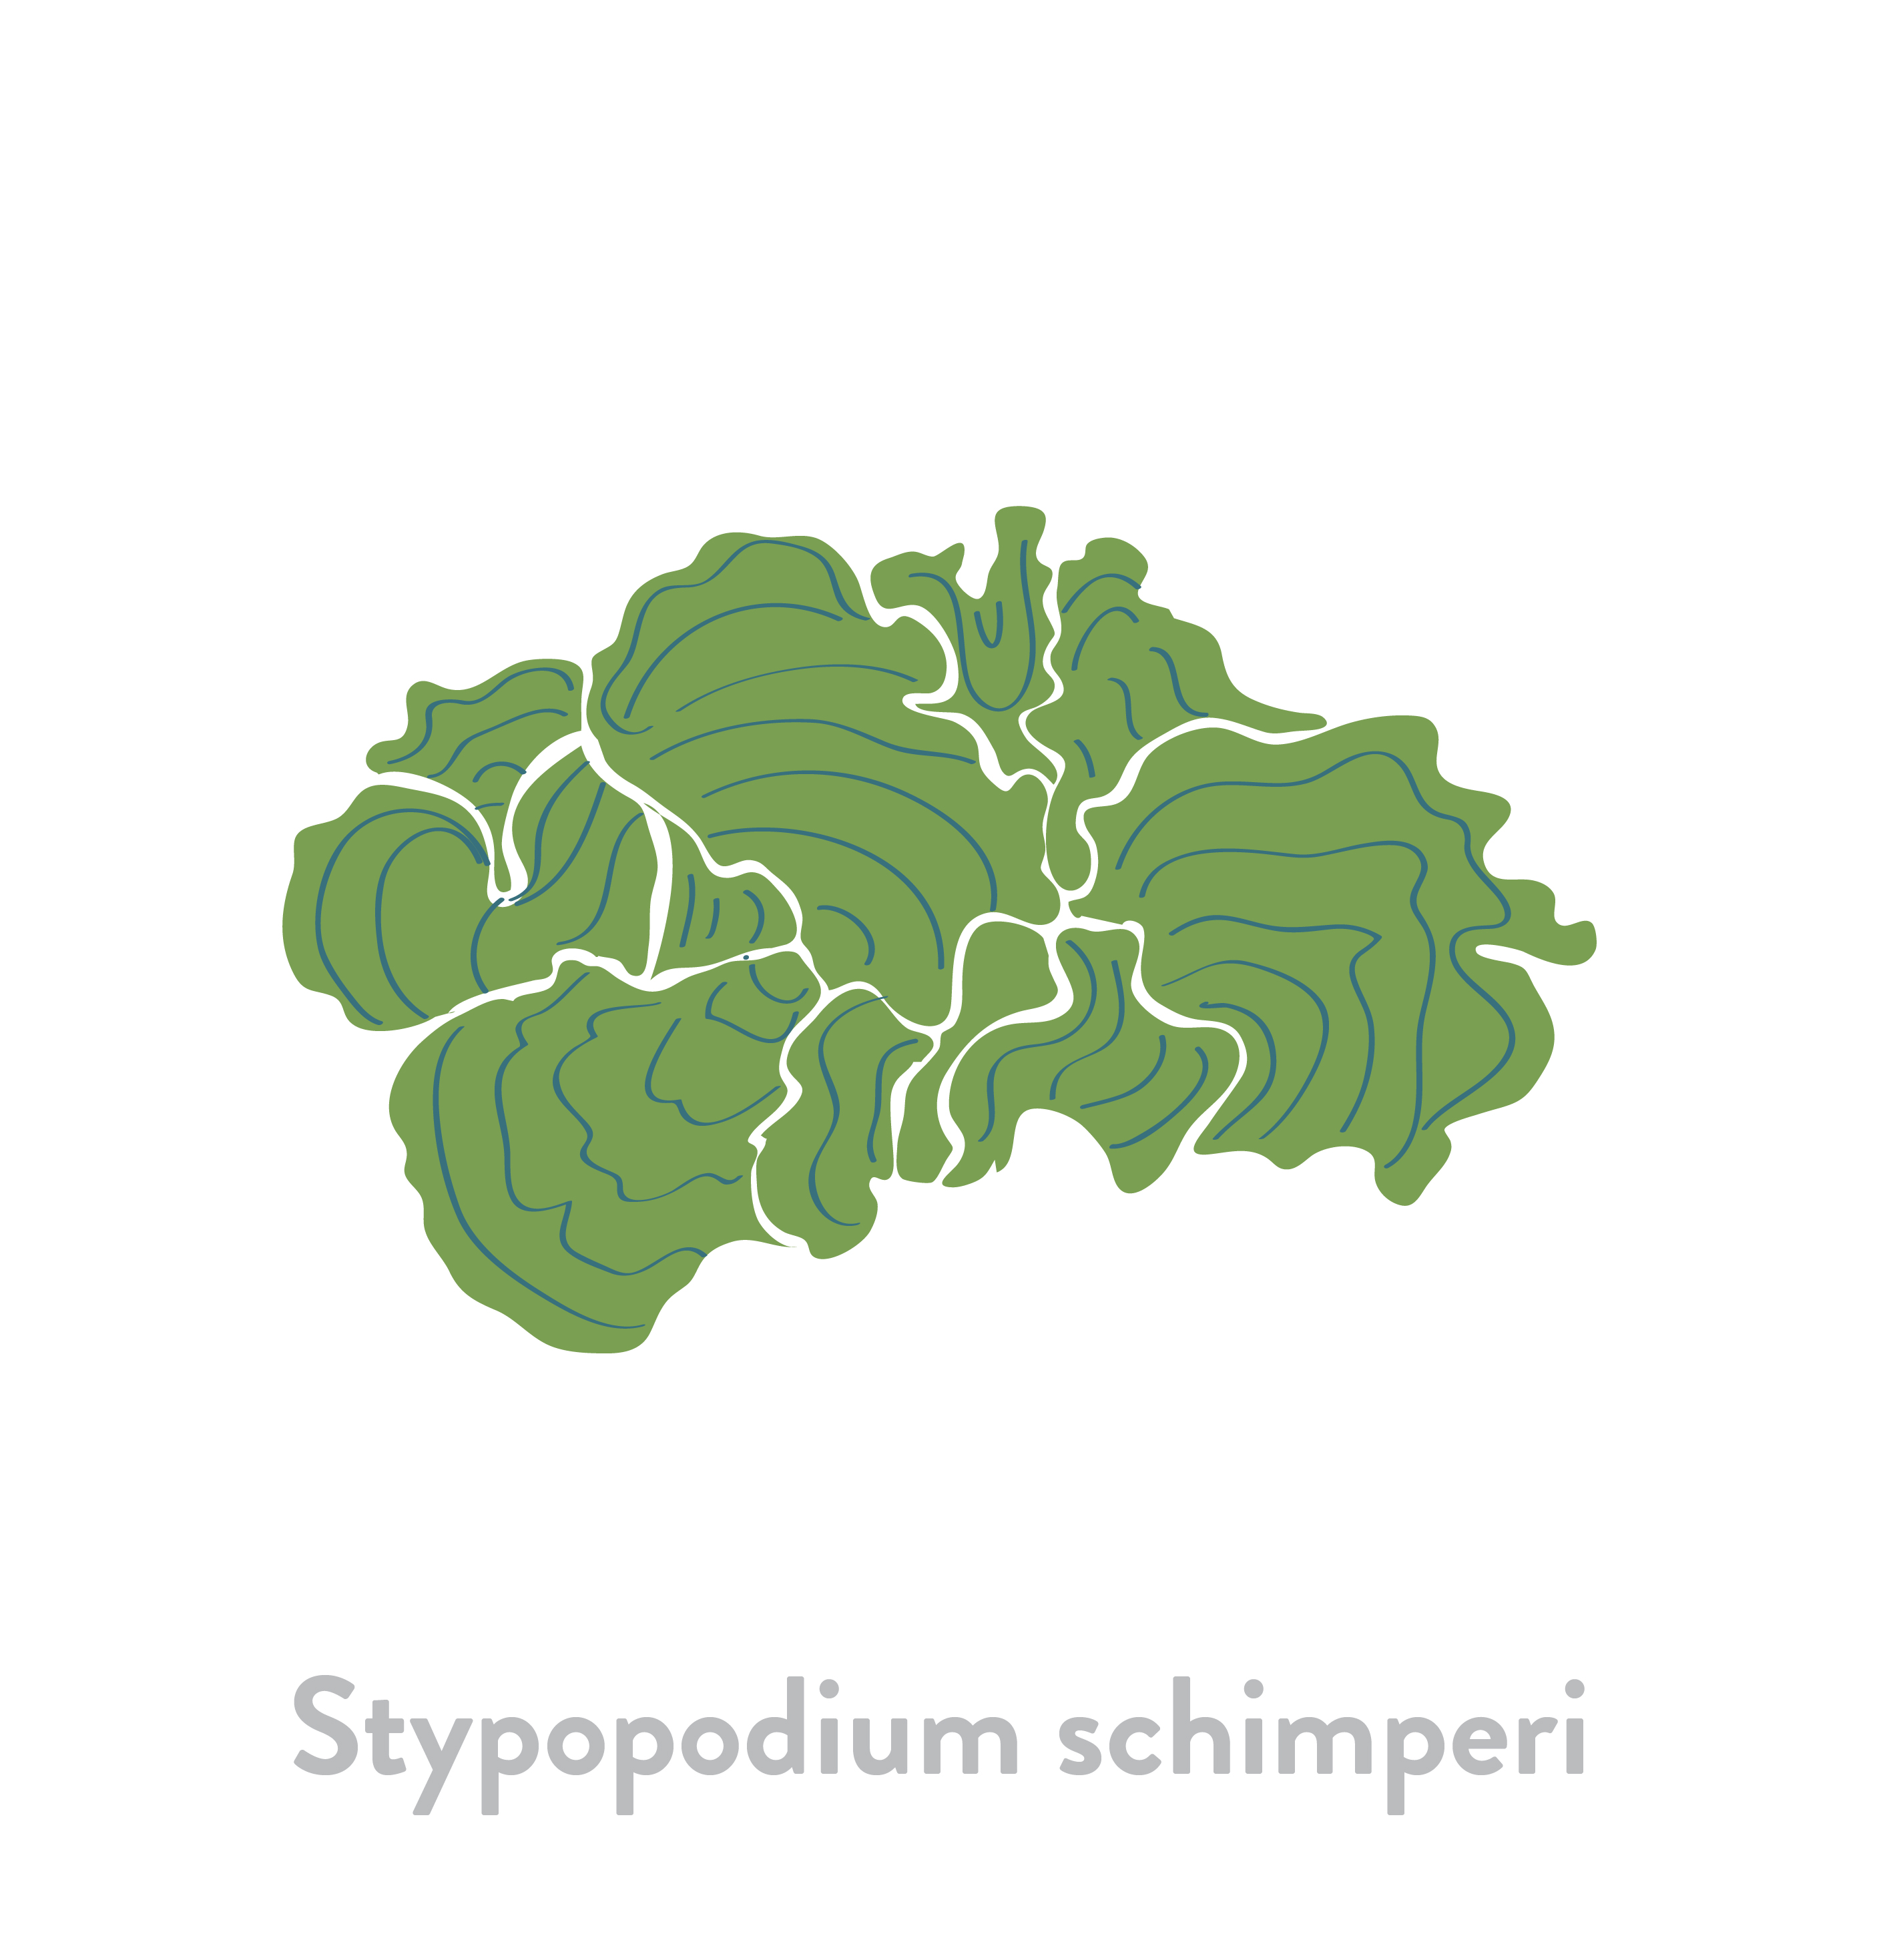 Stypopodium schimperi